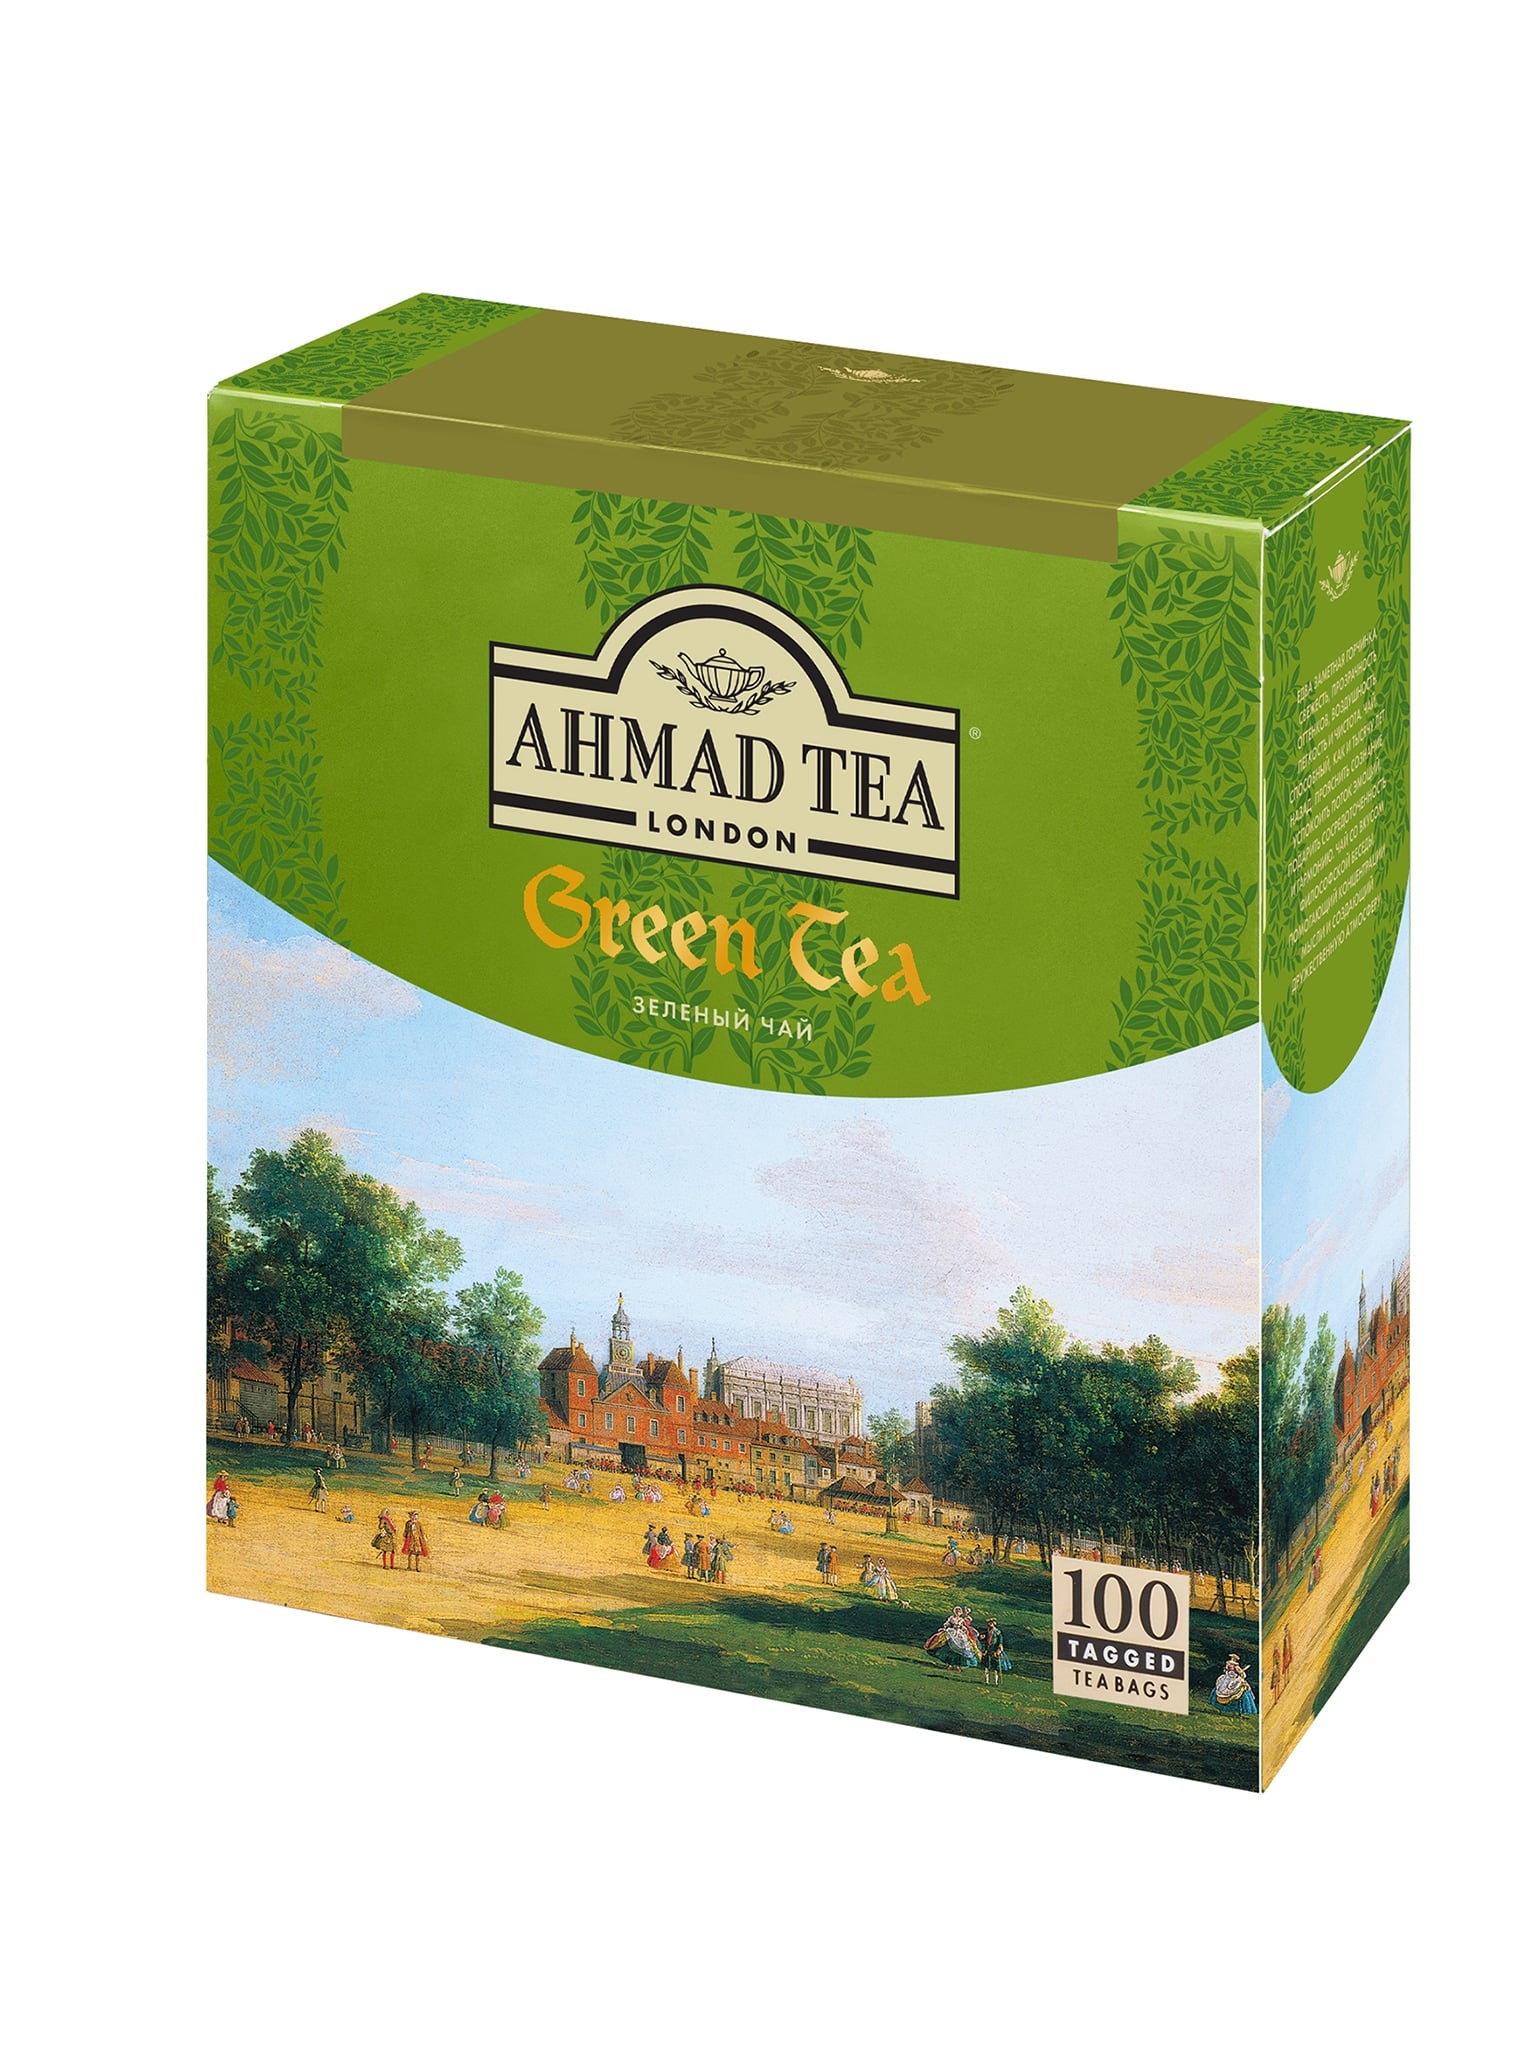 Черный чай в зеленой упаковке. Чай Ahmad Tea Green Tea зеленый (2г х 100шт), 200г. Чай Ахмад зеленый 100 пакетиков. Ahmad Tea чай зеленый 100. Пачка чая.